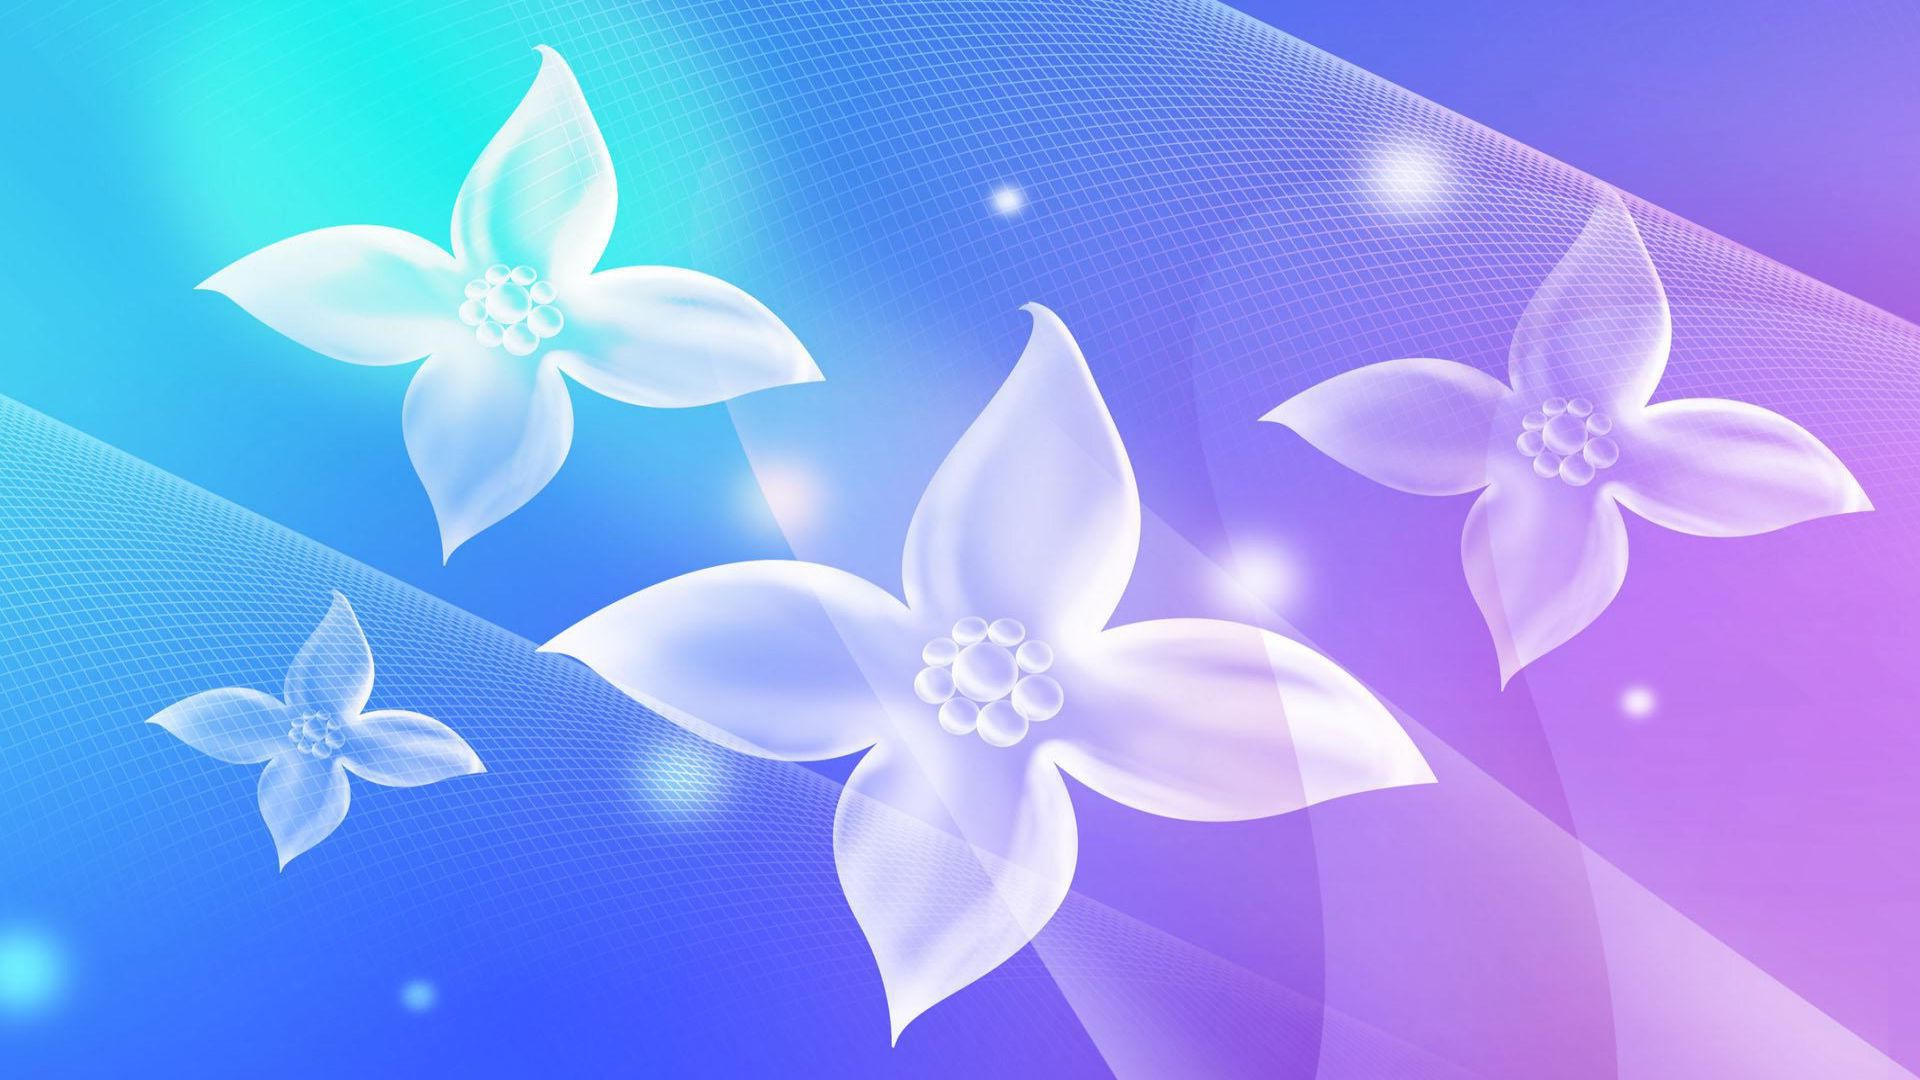 Translucent flowers wallpaper - Free Wide HD Wallpaper